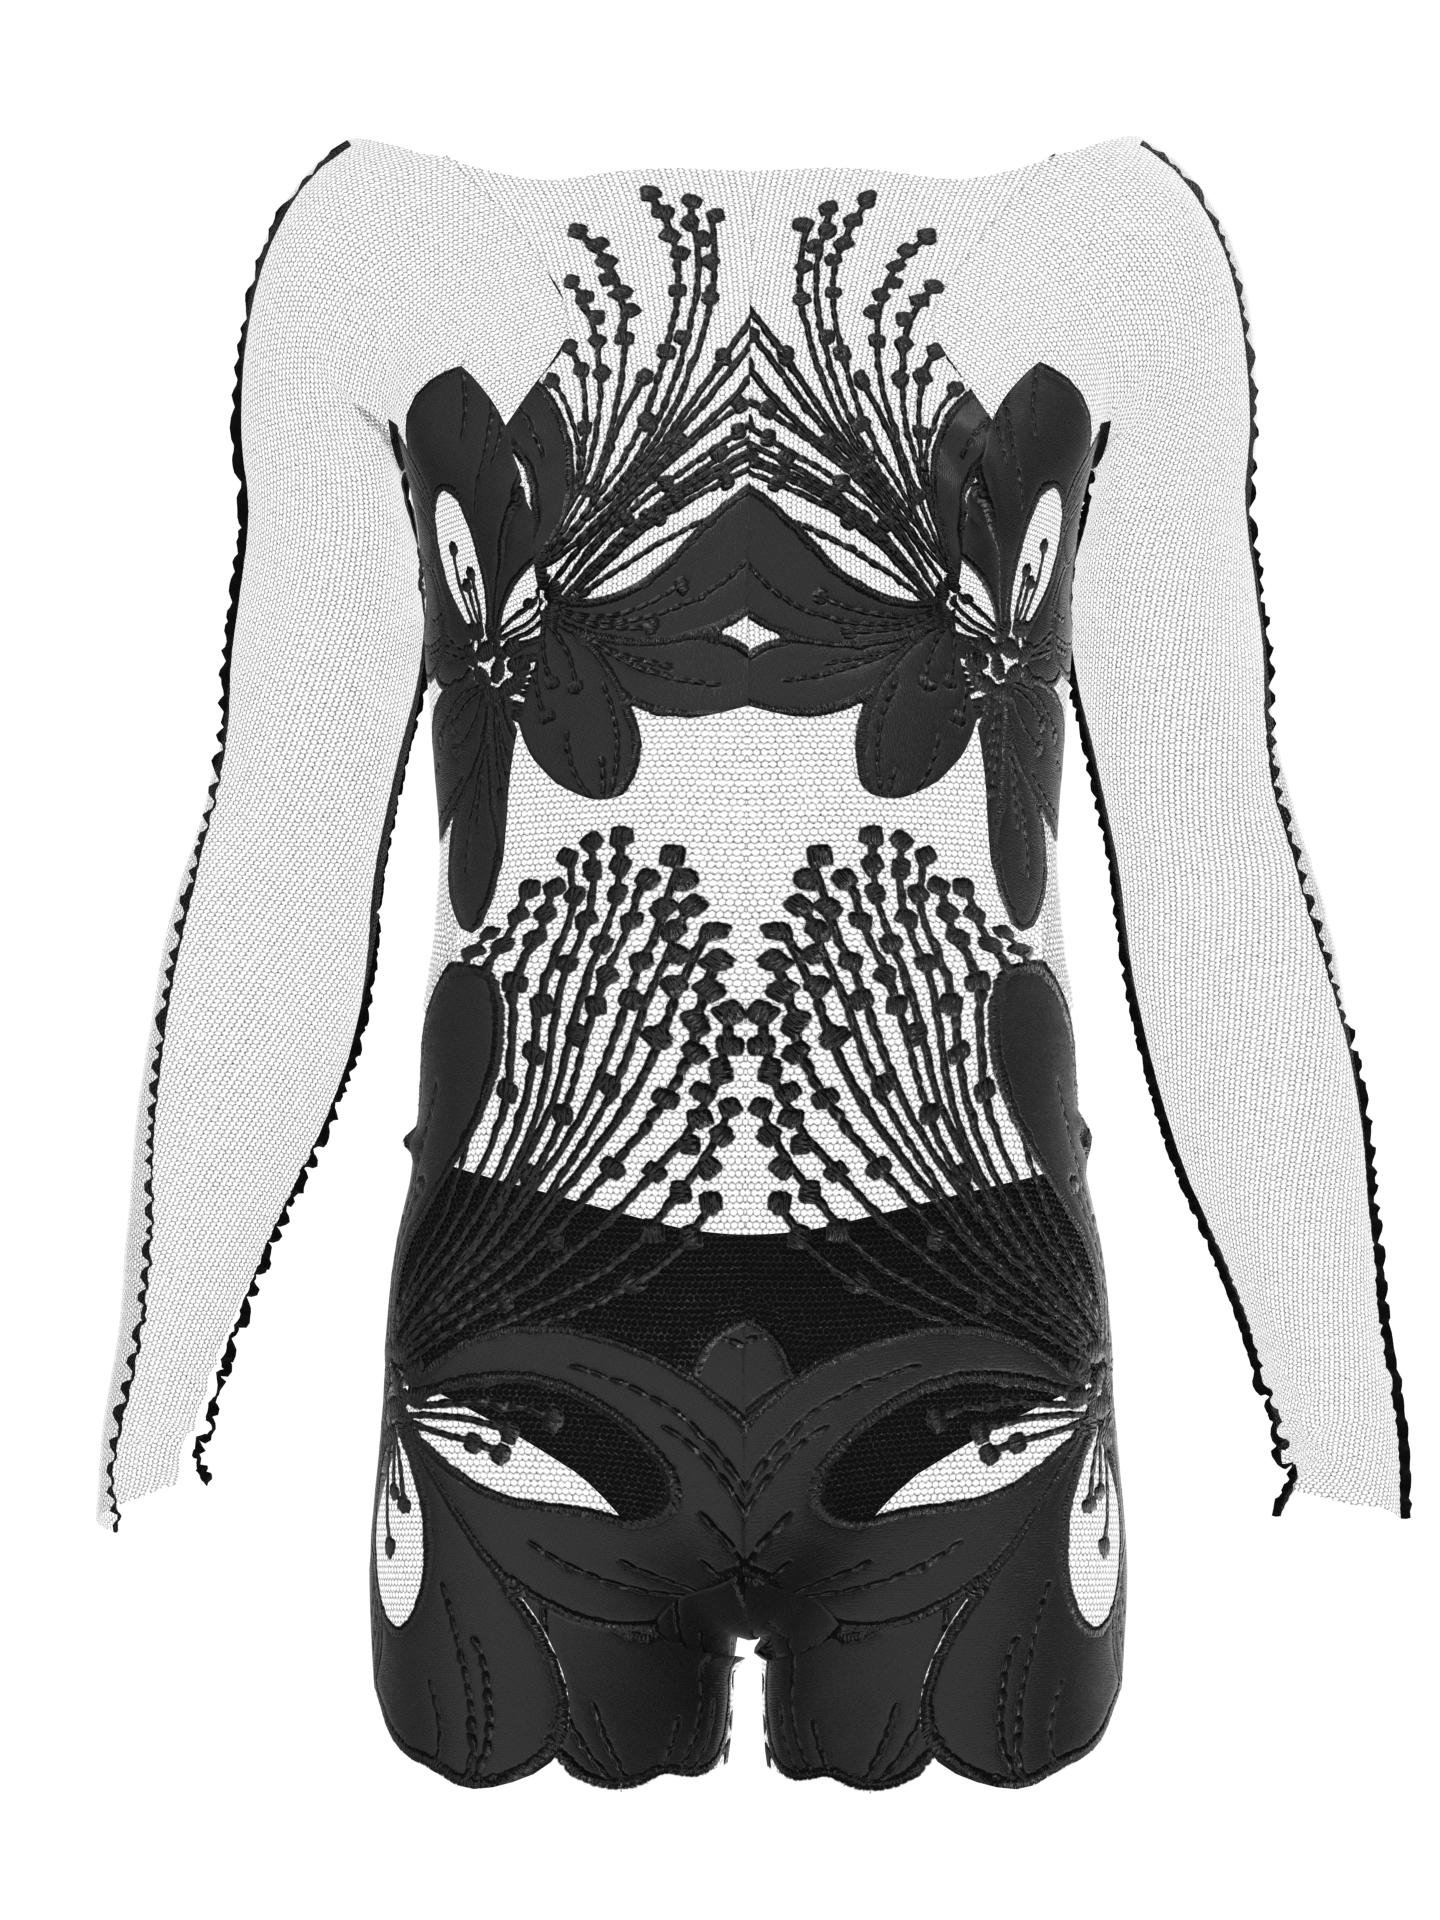 DiGi-BLOOM Bodysuit Male Black by HYPERCURVE